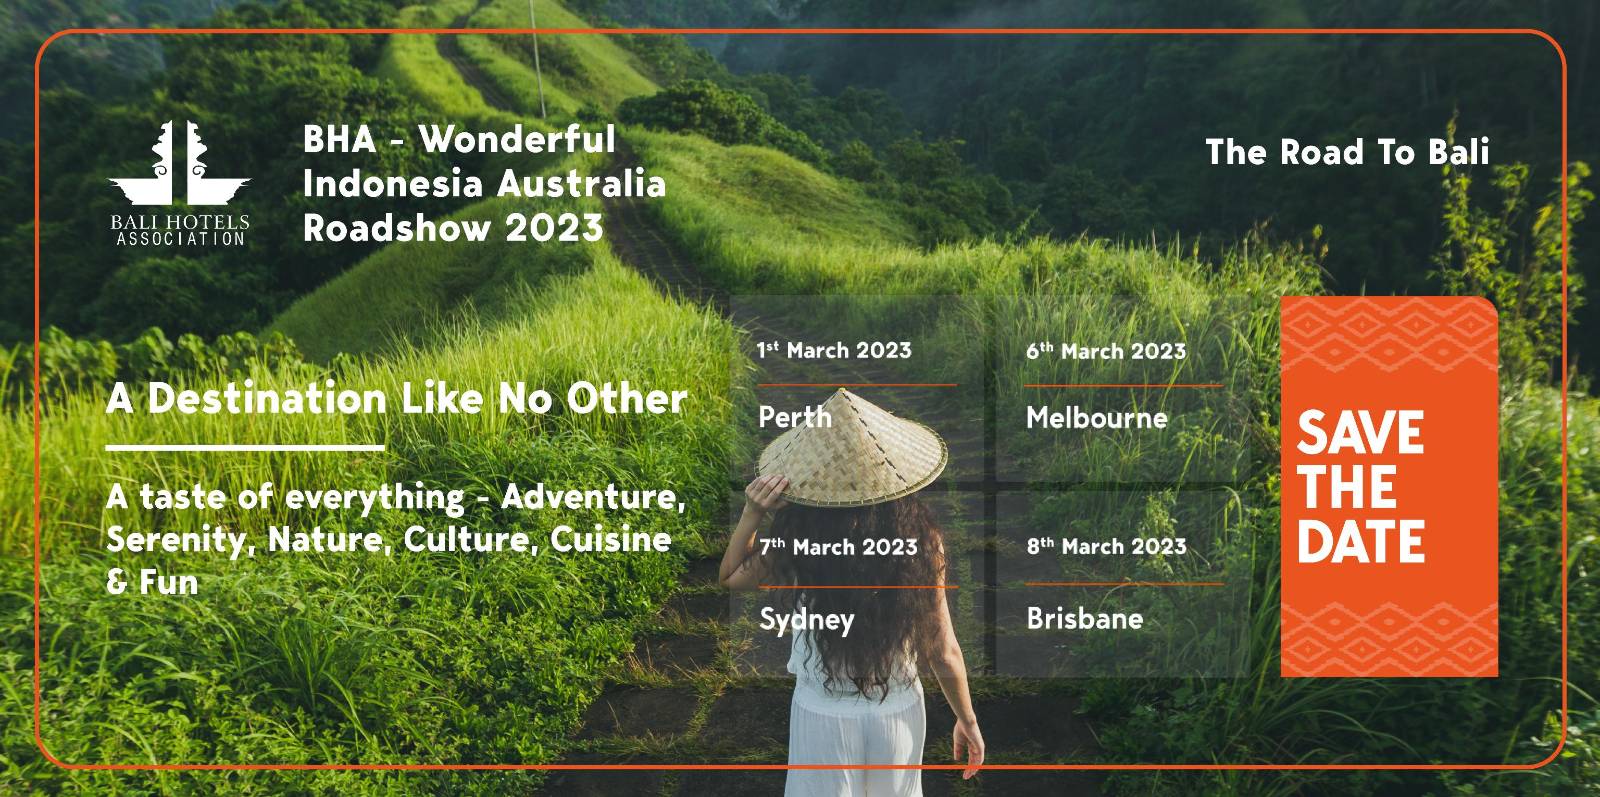 BHA - Wonderful Indonesia Australia Roadshow March 2023 image